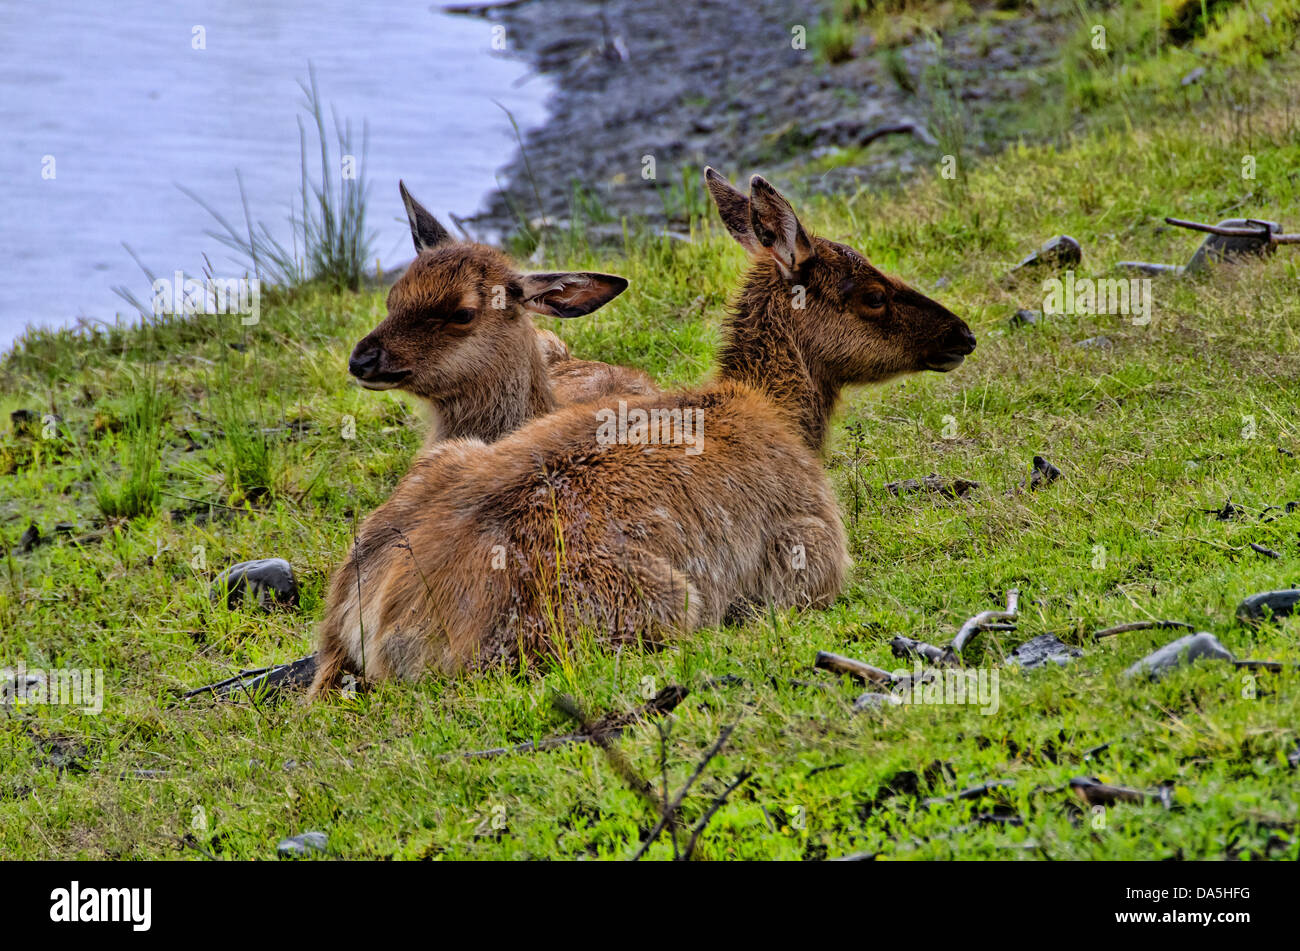 elk, cervus elaphus, wildlife, conservation, center, Alaska, USA, United States, America, animal, Stock Photo